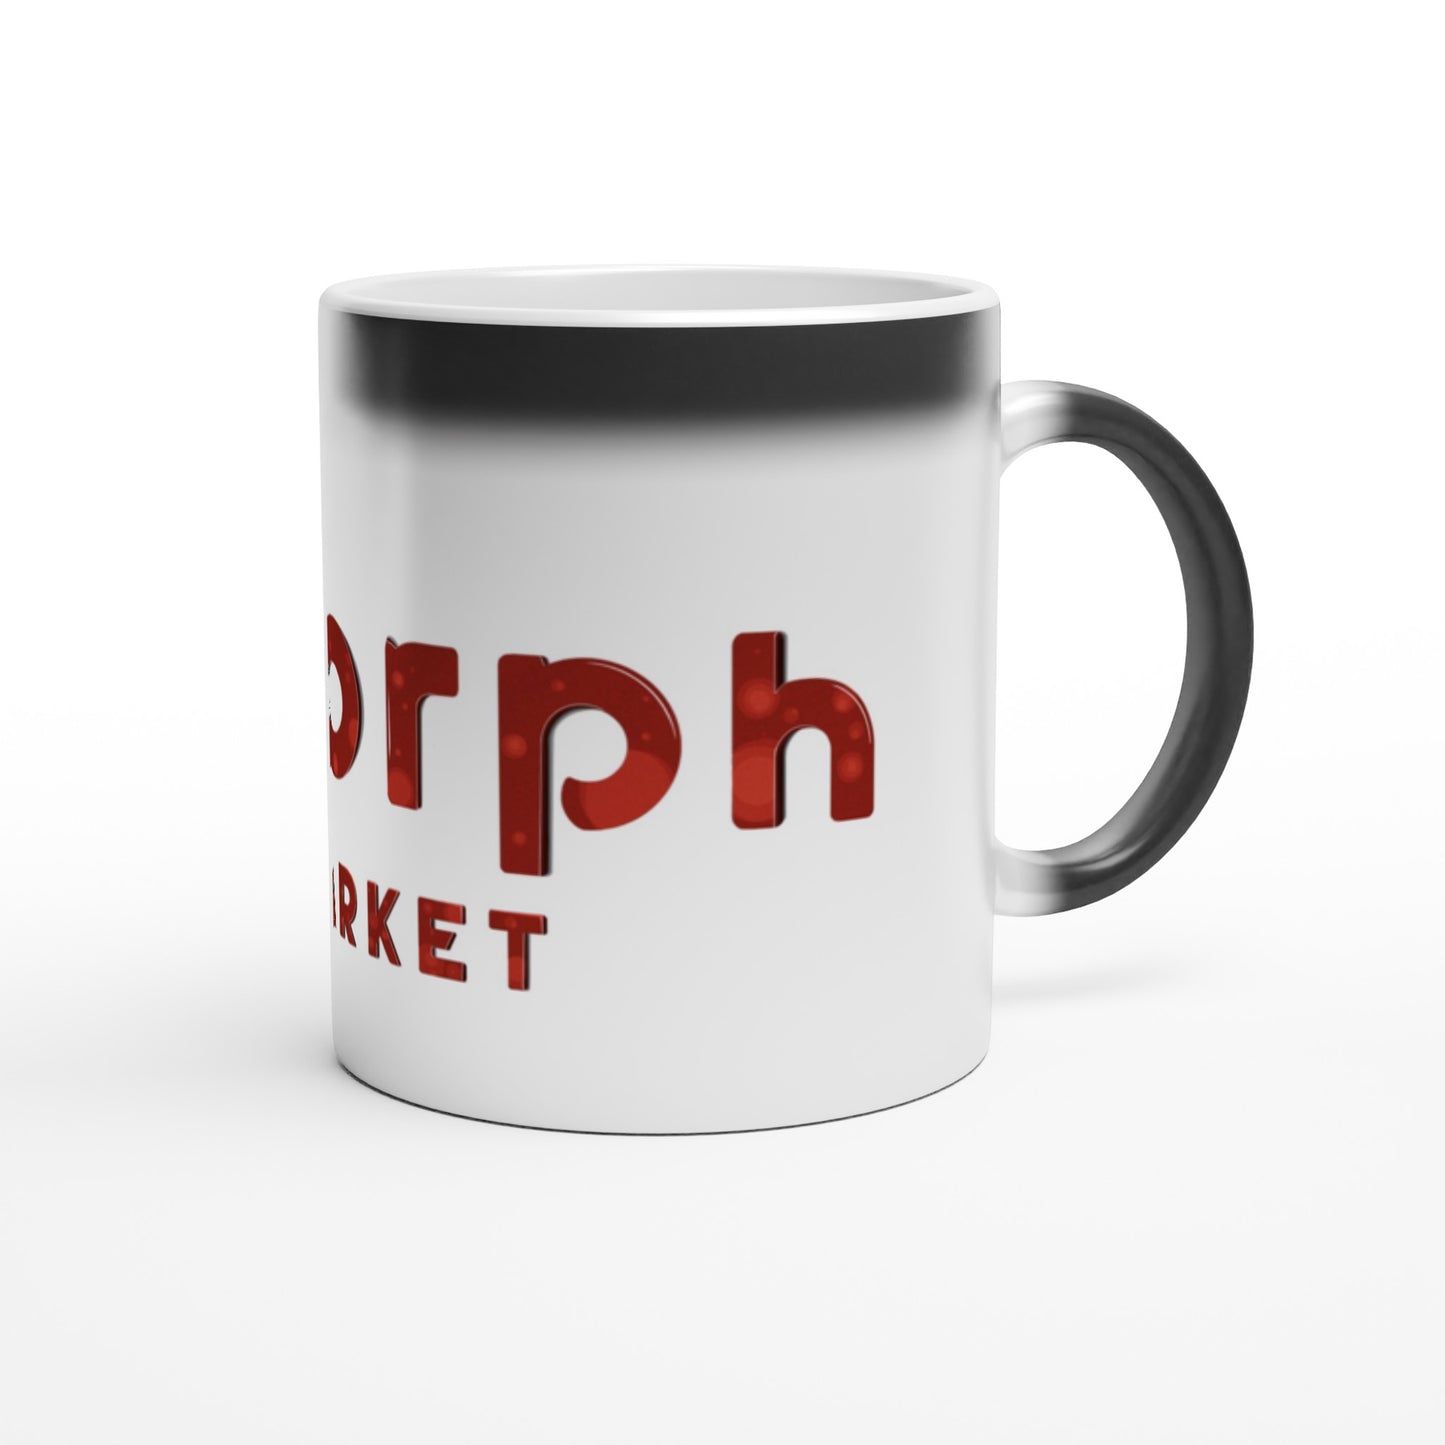 Morph Market (Red Circles) - Magic 11oz Ceramic Mug